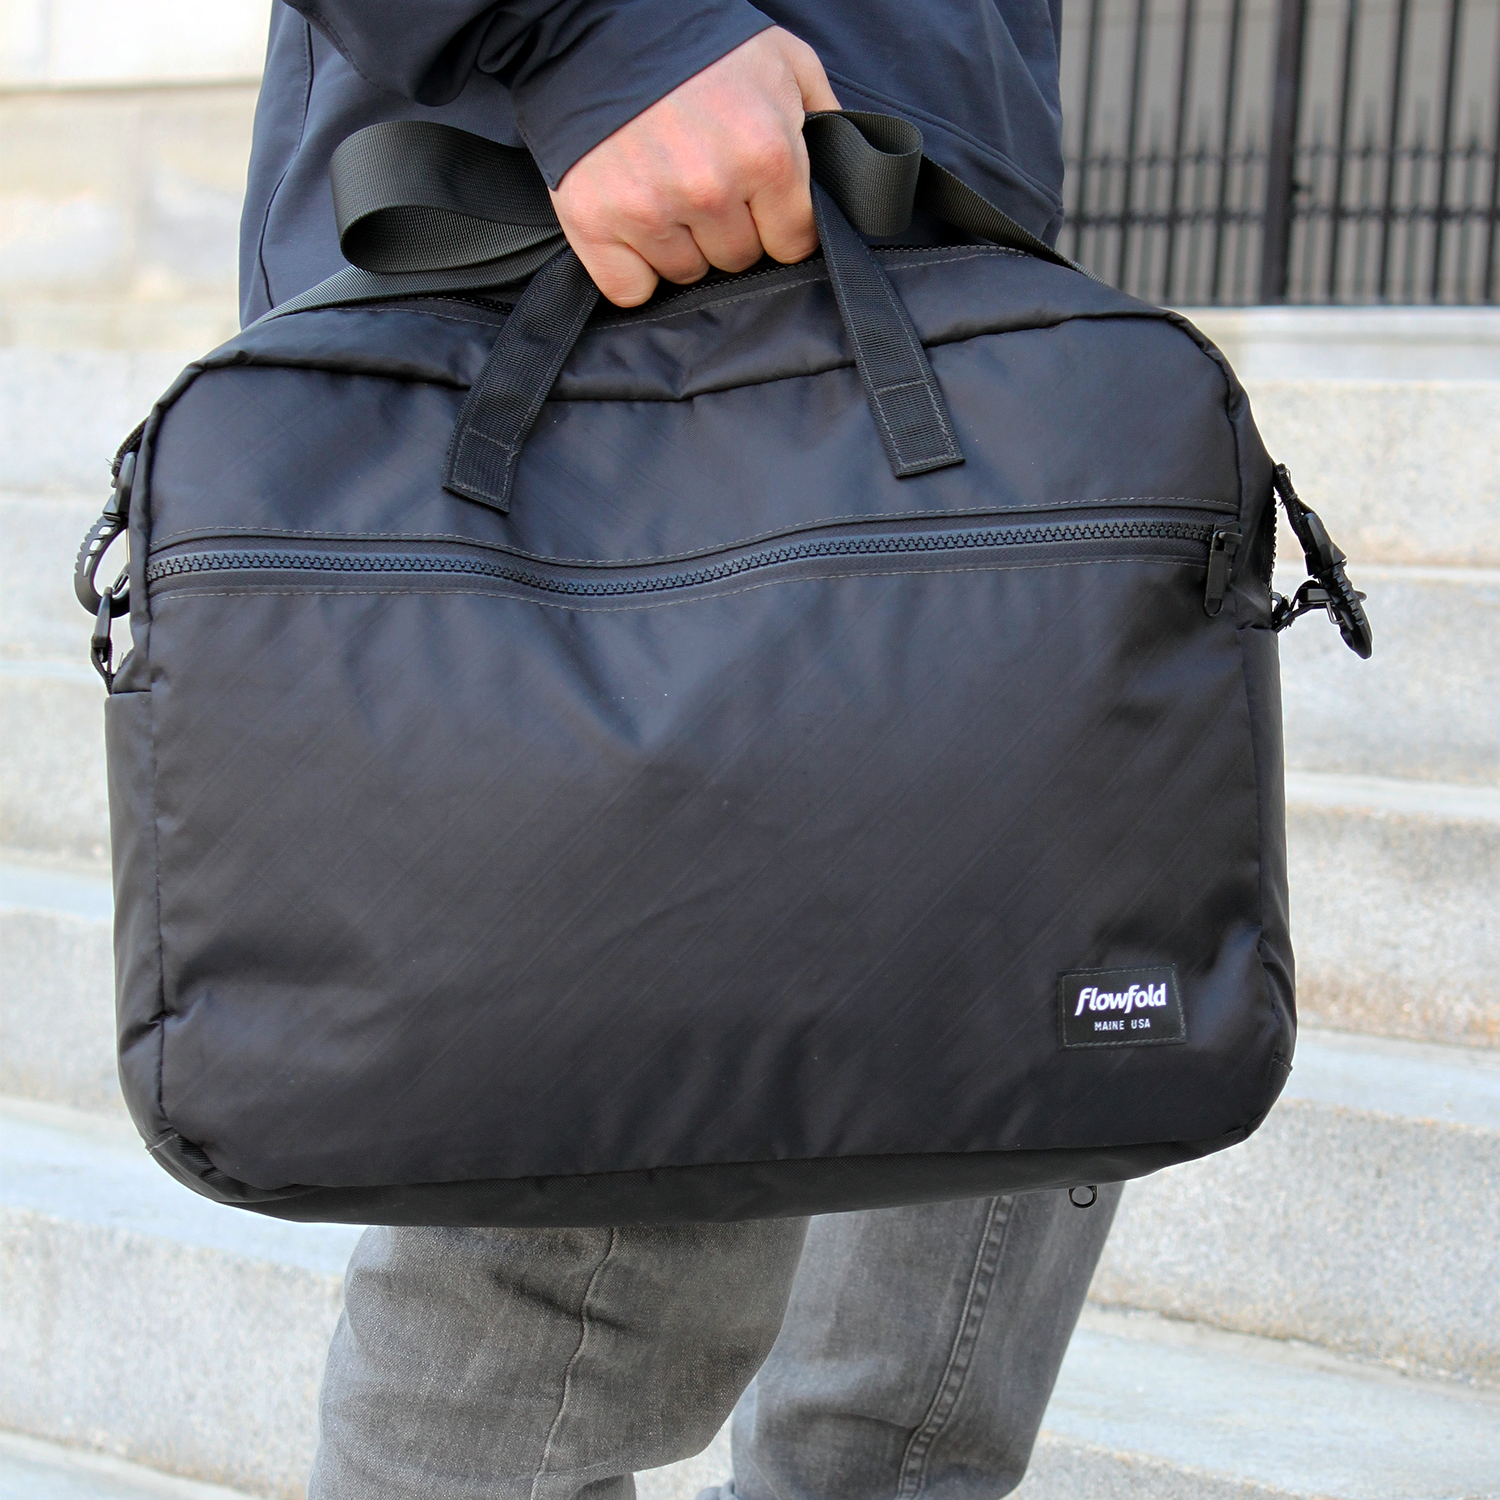 Franklin covey unisex black briefcase travel bag